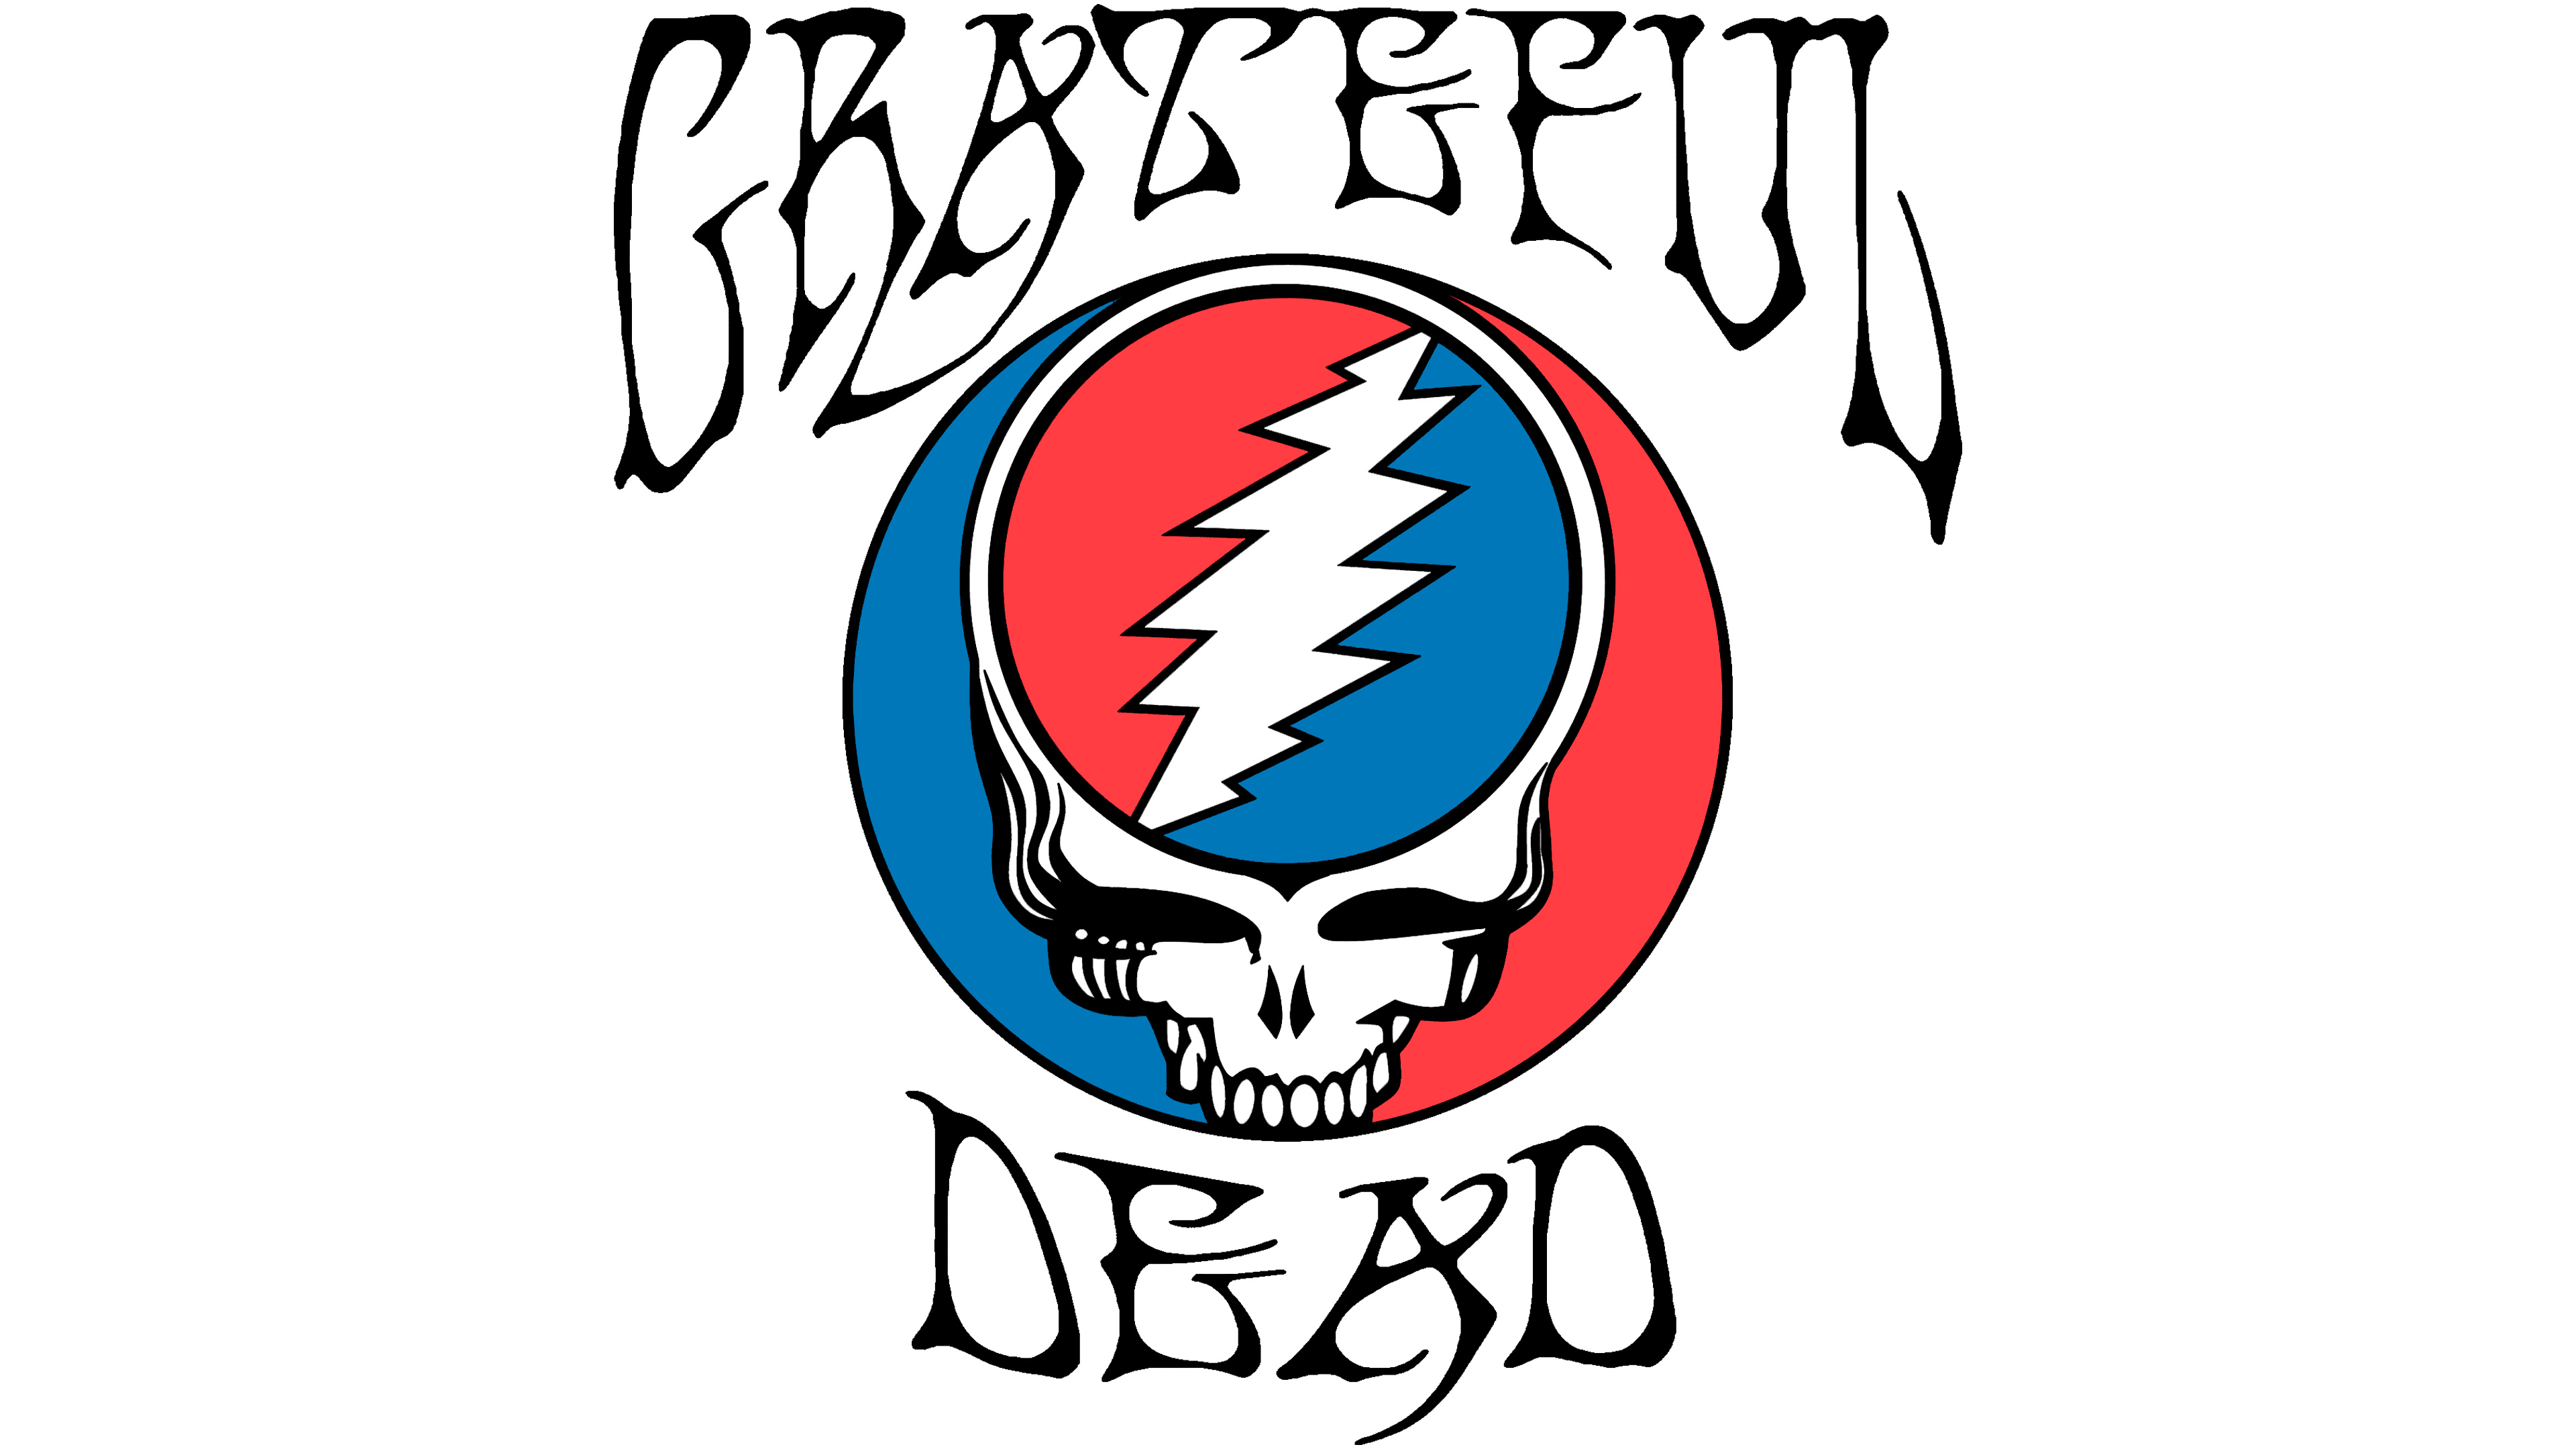 Grateful Dead: An American rock band formed in 1965 in Palo Alto, California, Elements of rock, folk, country, jazz. 3840x2160 4K Wallpaper.